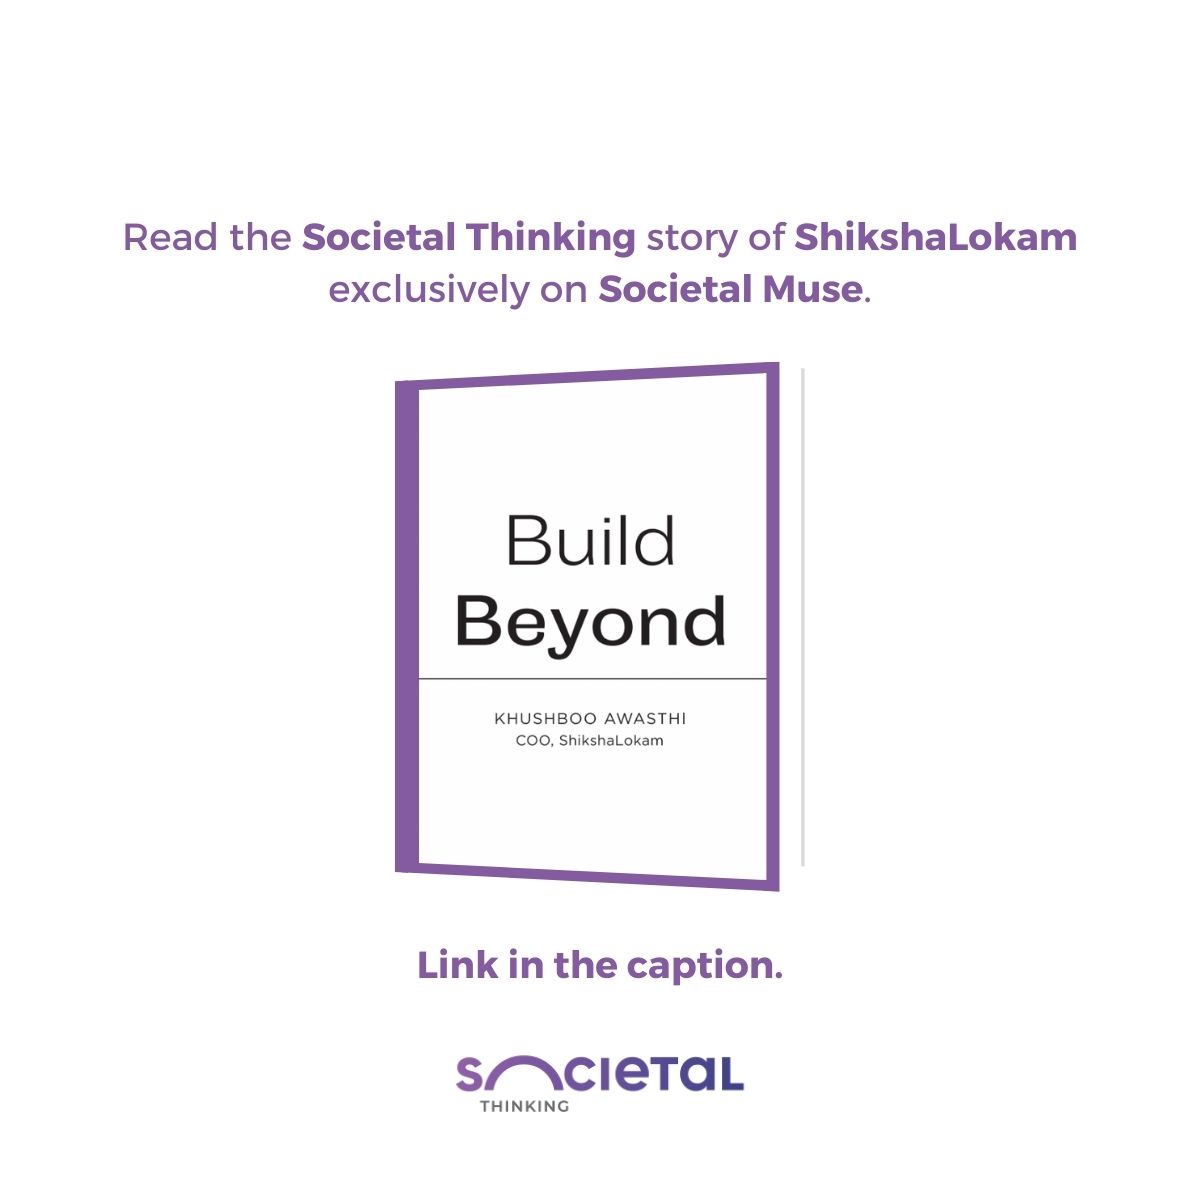 Read the Societal Thinking story of @ShikshaLokam exclusively on Societal Muse here:
bit.ly/smtshlkm

#societalmuse #findyourmuse #societalthinking #socialimpact #socialinnovation #leadership